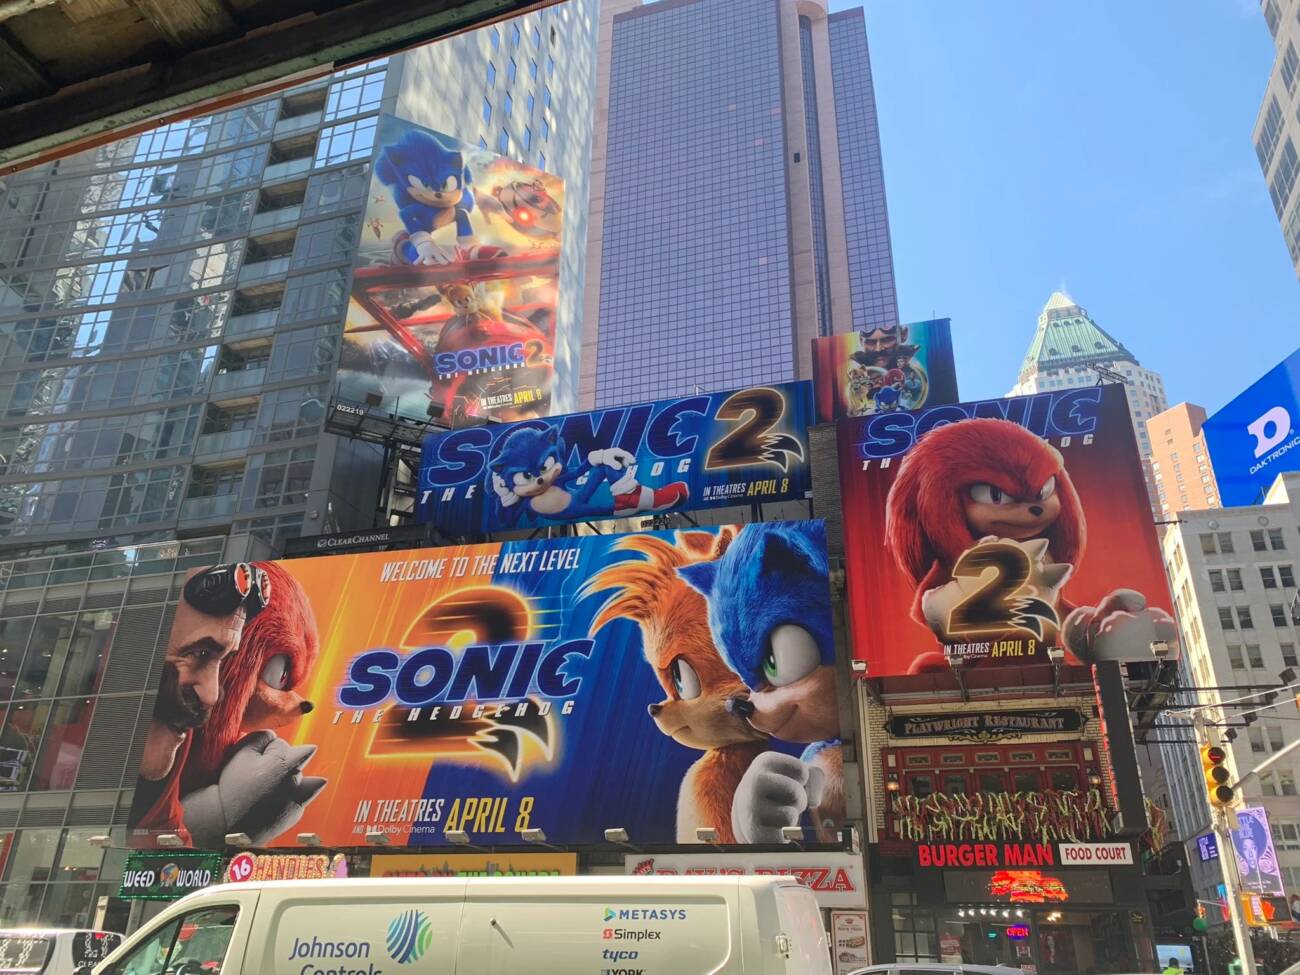 Planeta Sonic on X: Sonic O Filme 2 coming soon at Mauá Plaza